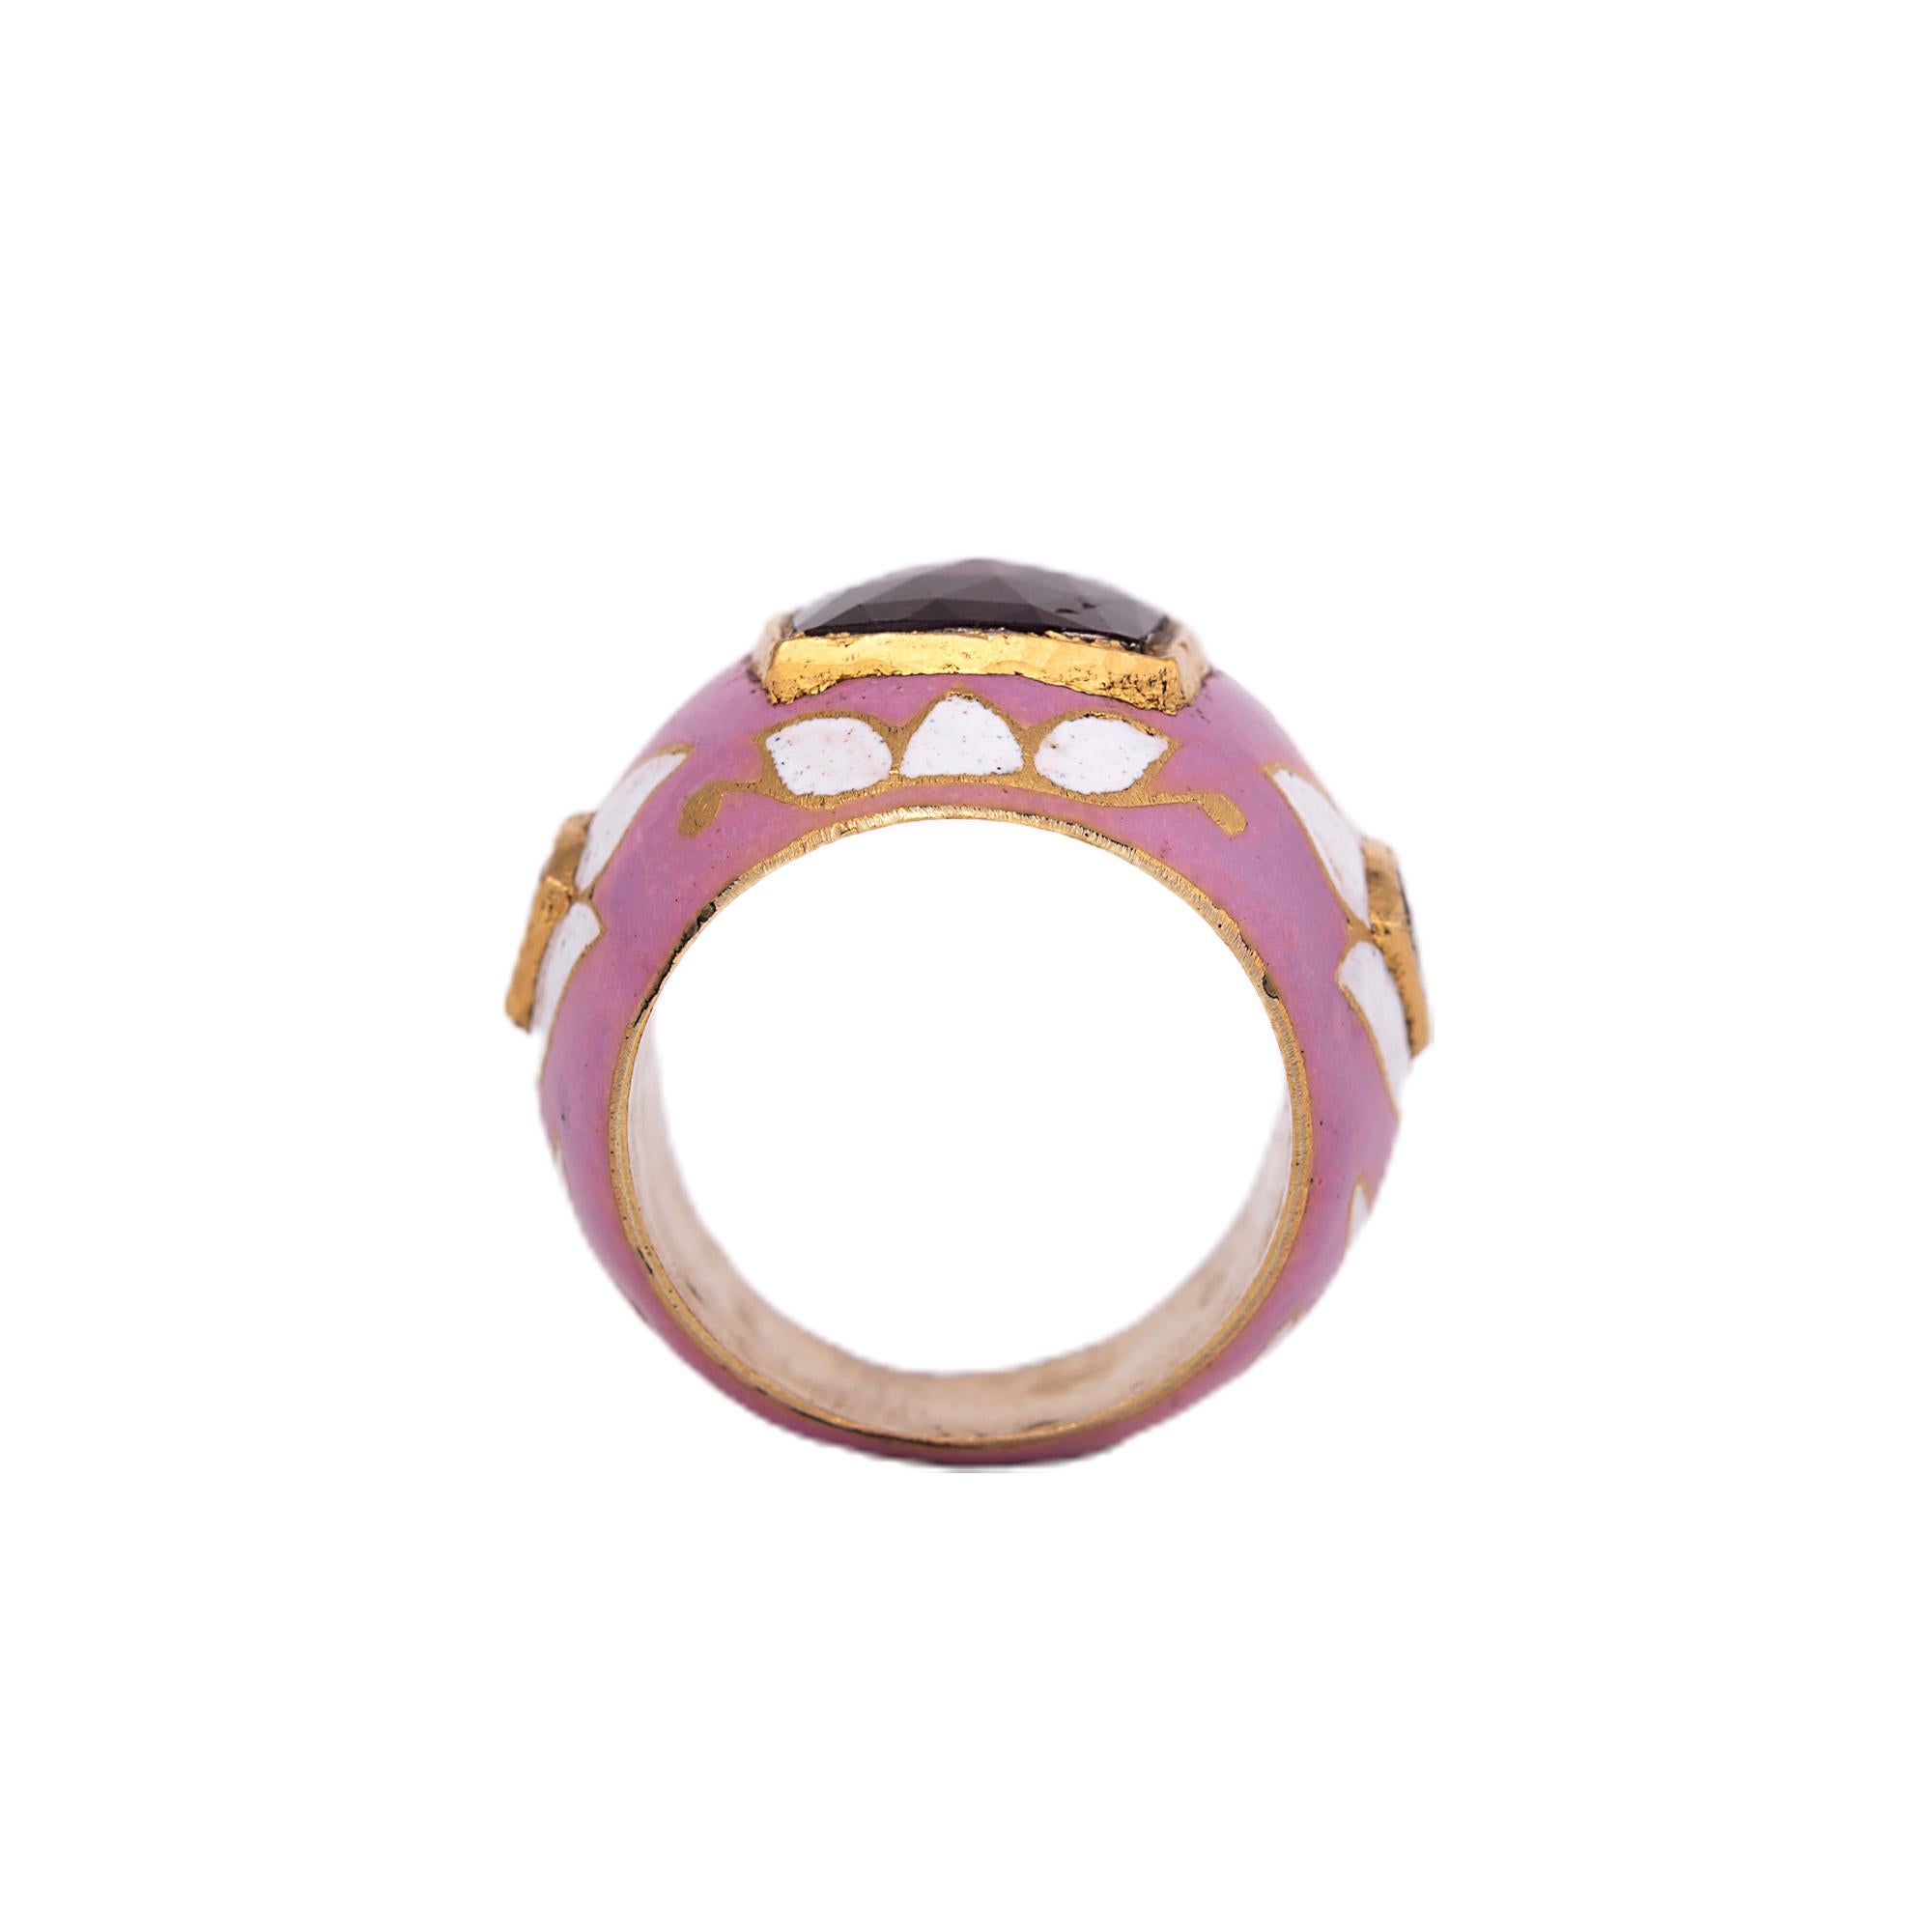 22 Karat Gold Tourmaline and Diamond Cocktail Ring in Pink and White Enamel Work 1